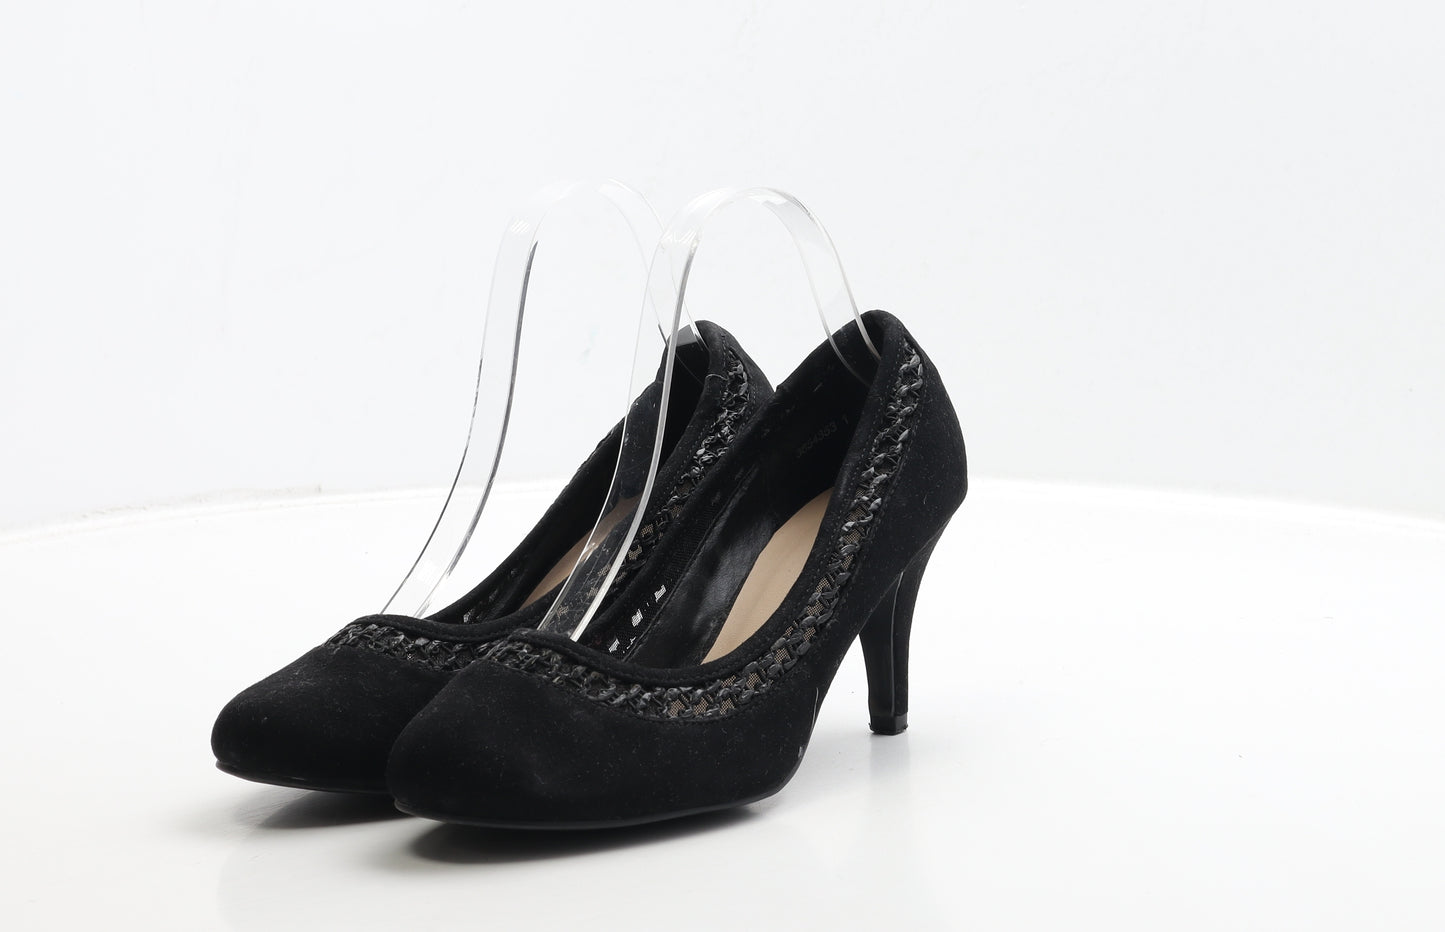 New Look Womens Black Leather Court Heel UK 5 38 - Mesh Detail